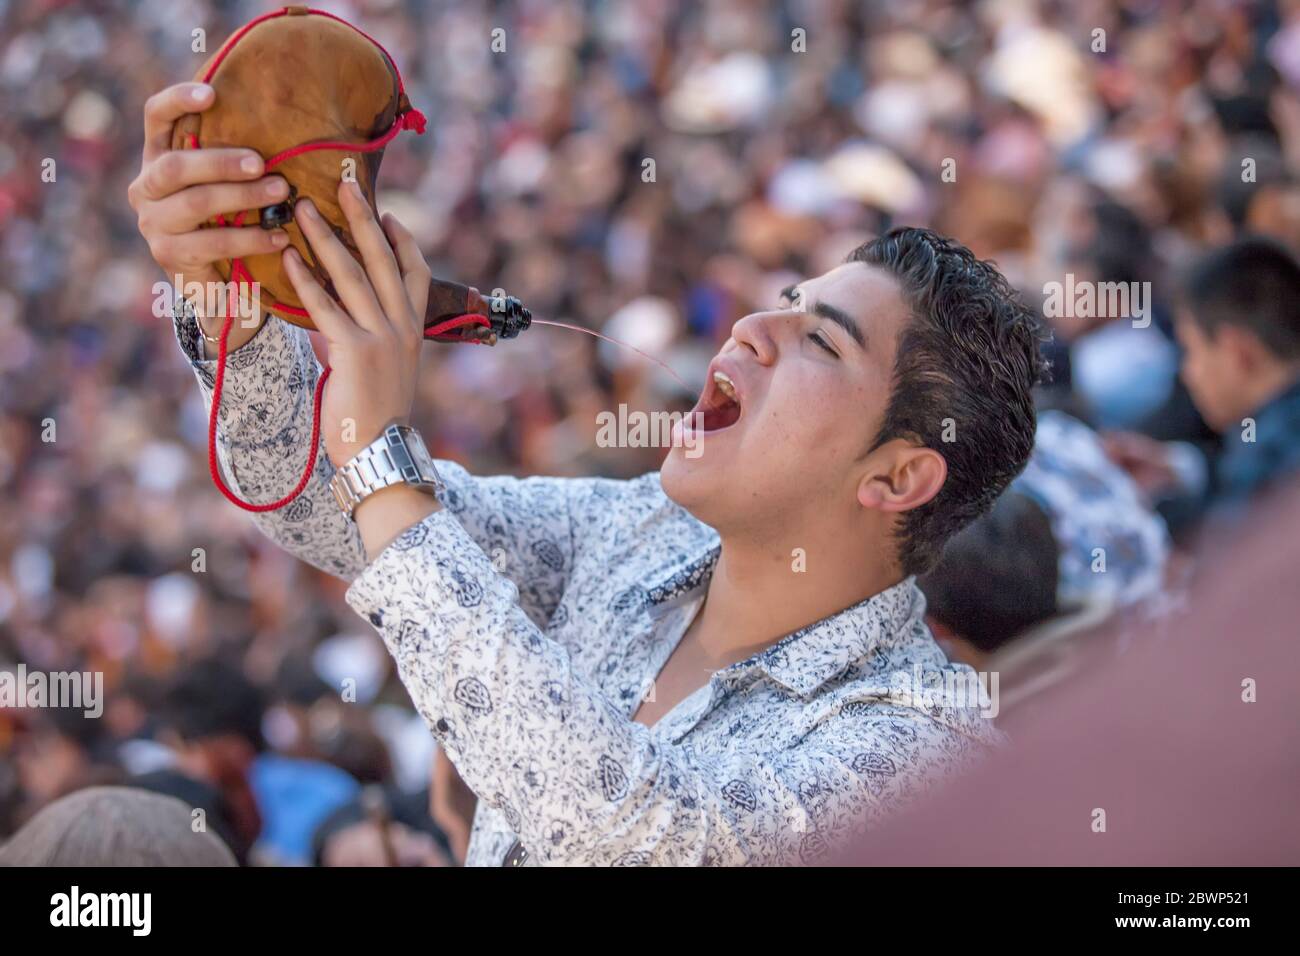 Hombre bebiendo vino de la bolsa de cuero español Foto de stock